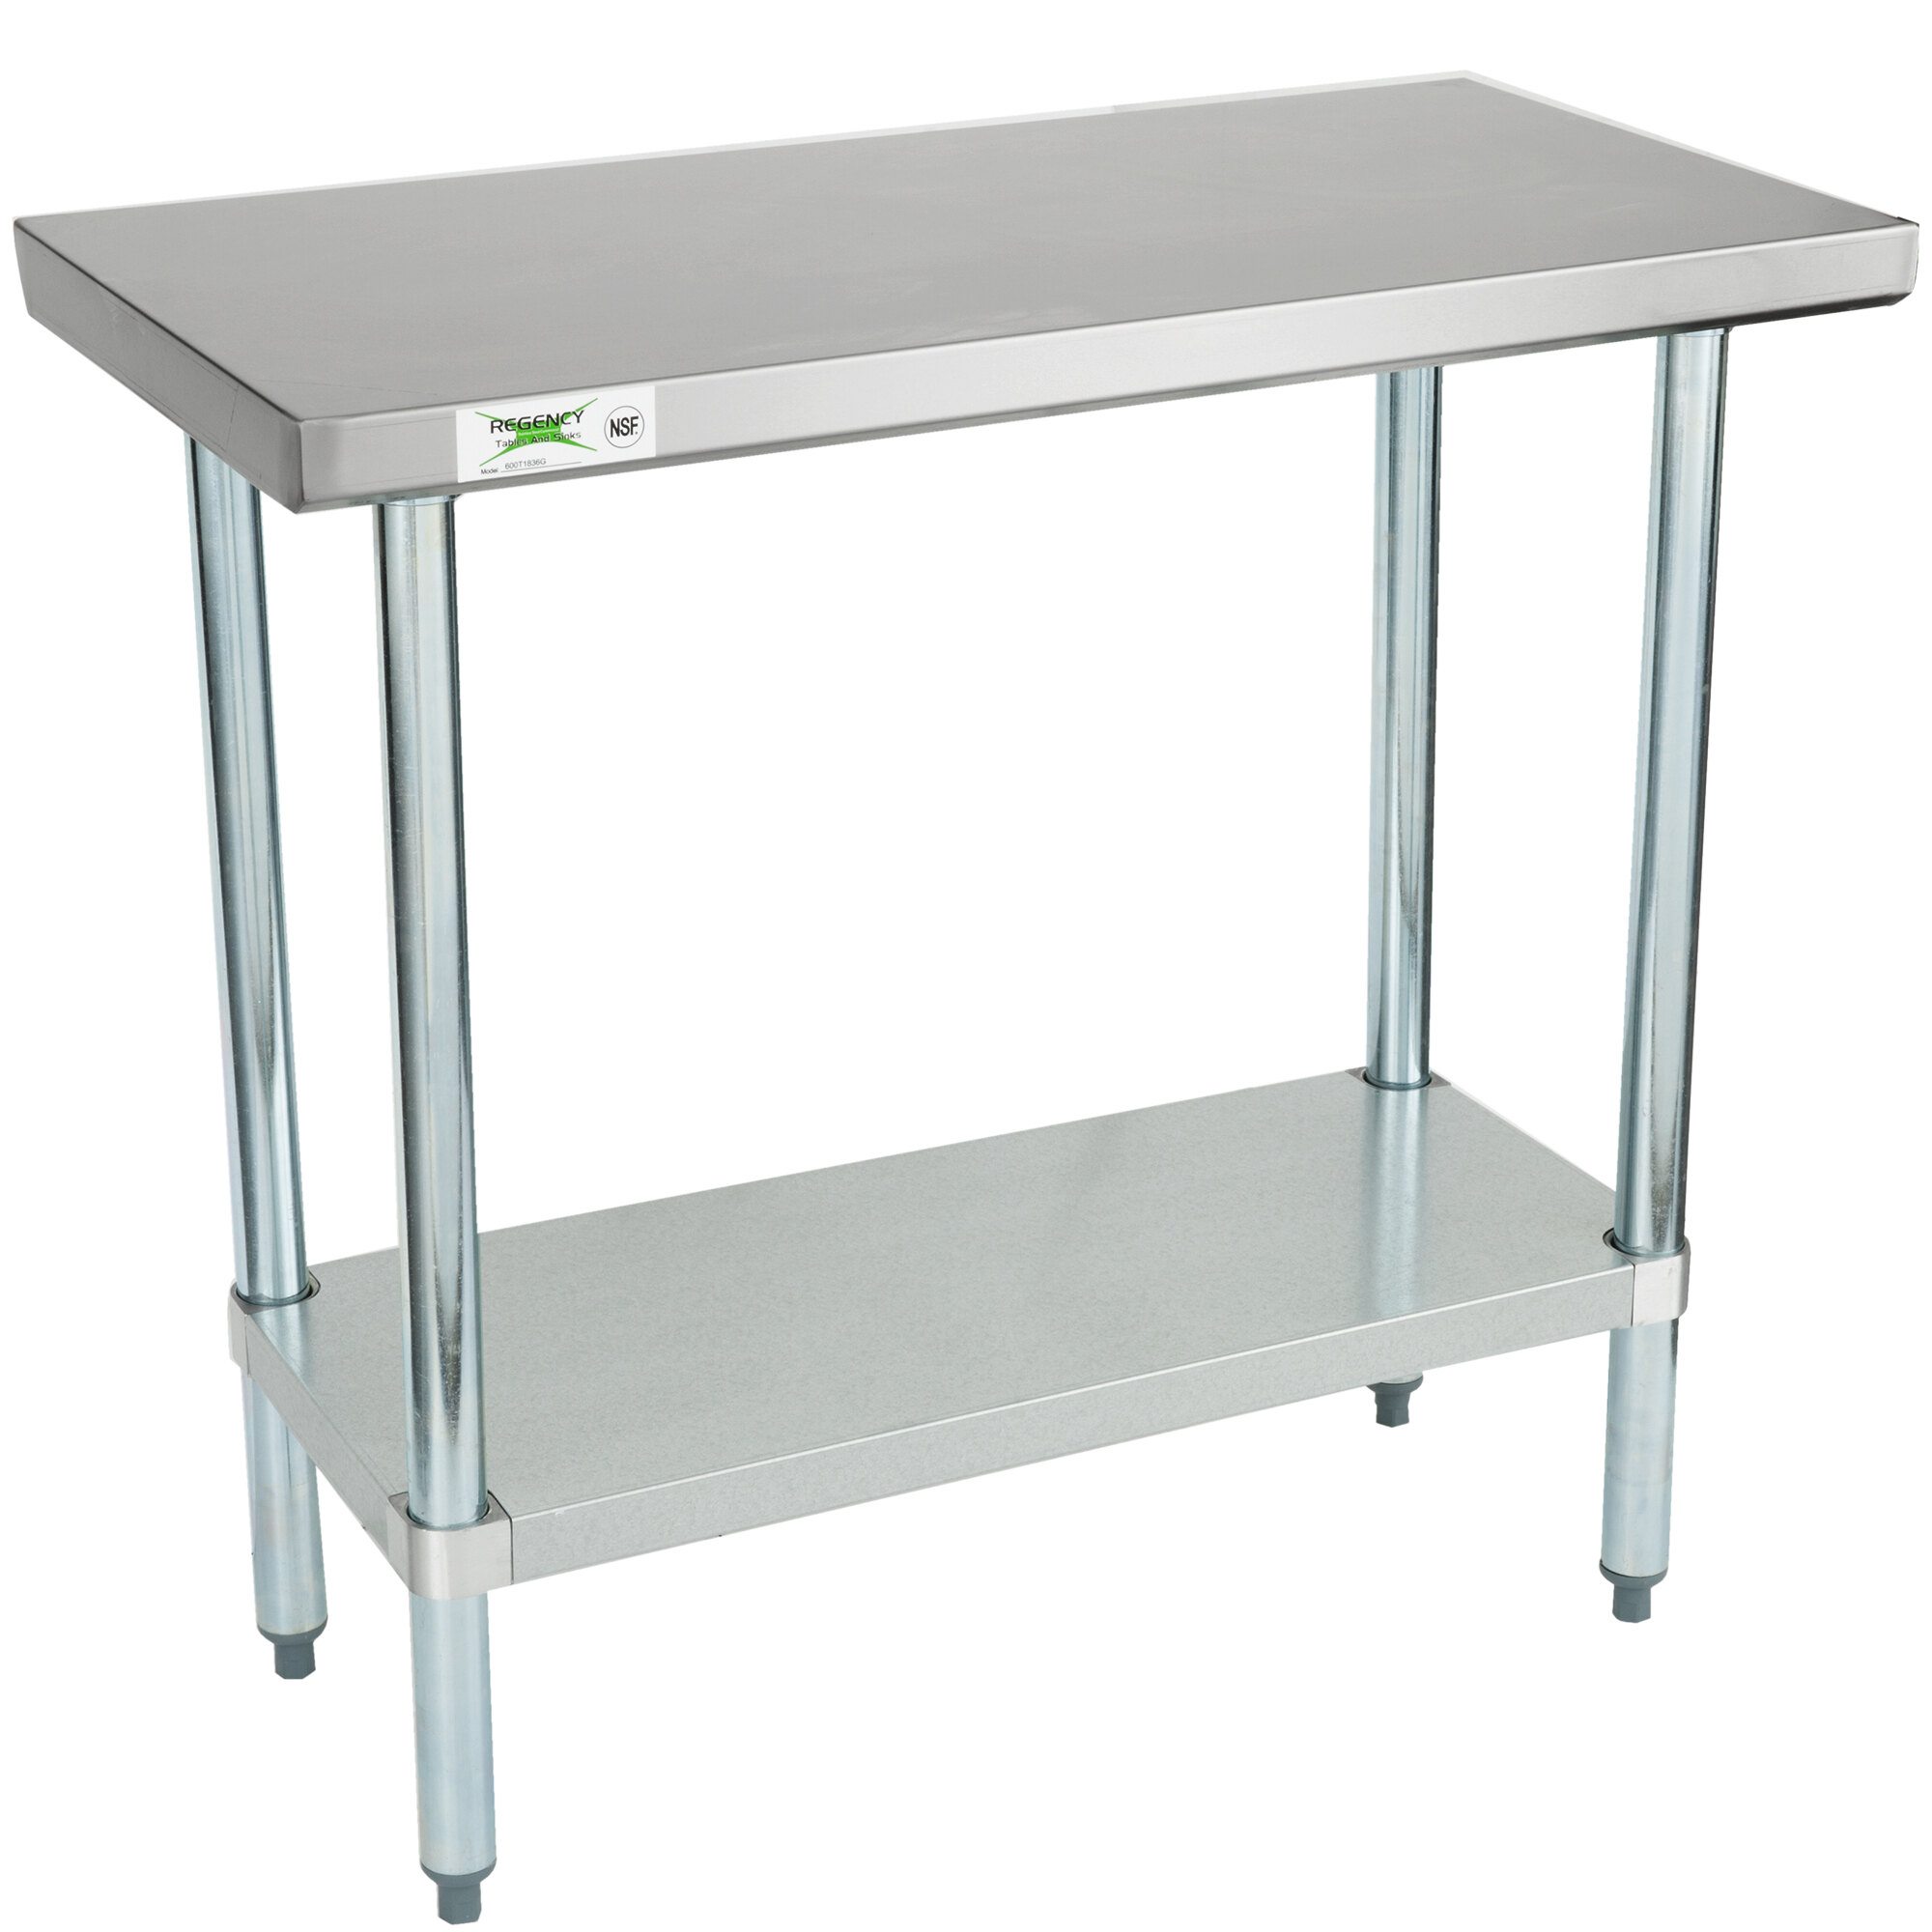 Regency 18" x 36" 18-Gauge 304 Stainless Steel Commercial Work Table Stainless Steel Work Table Legs